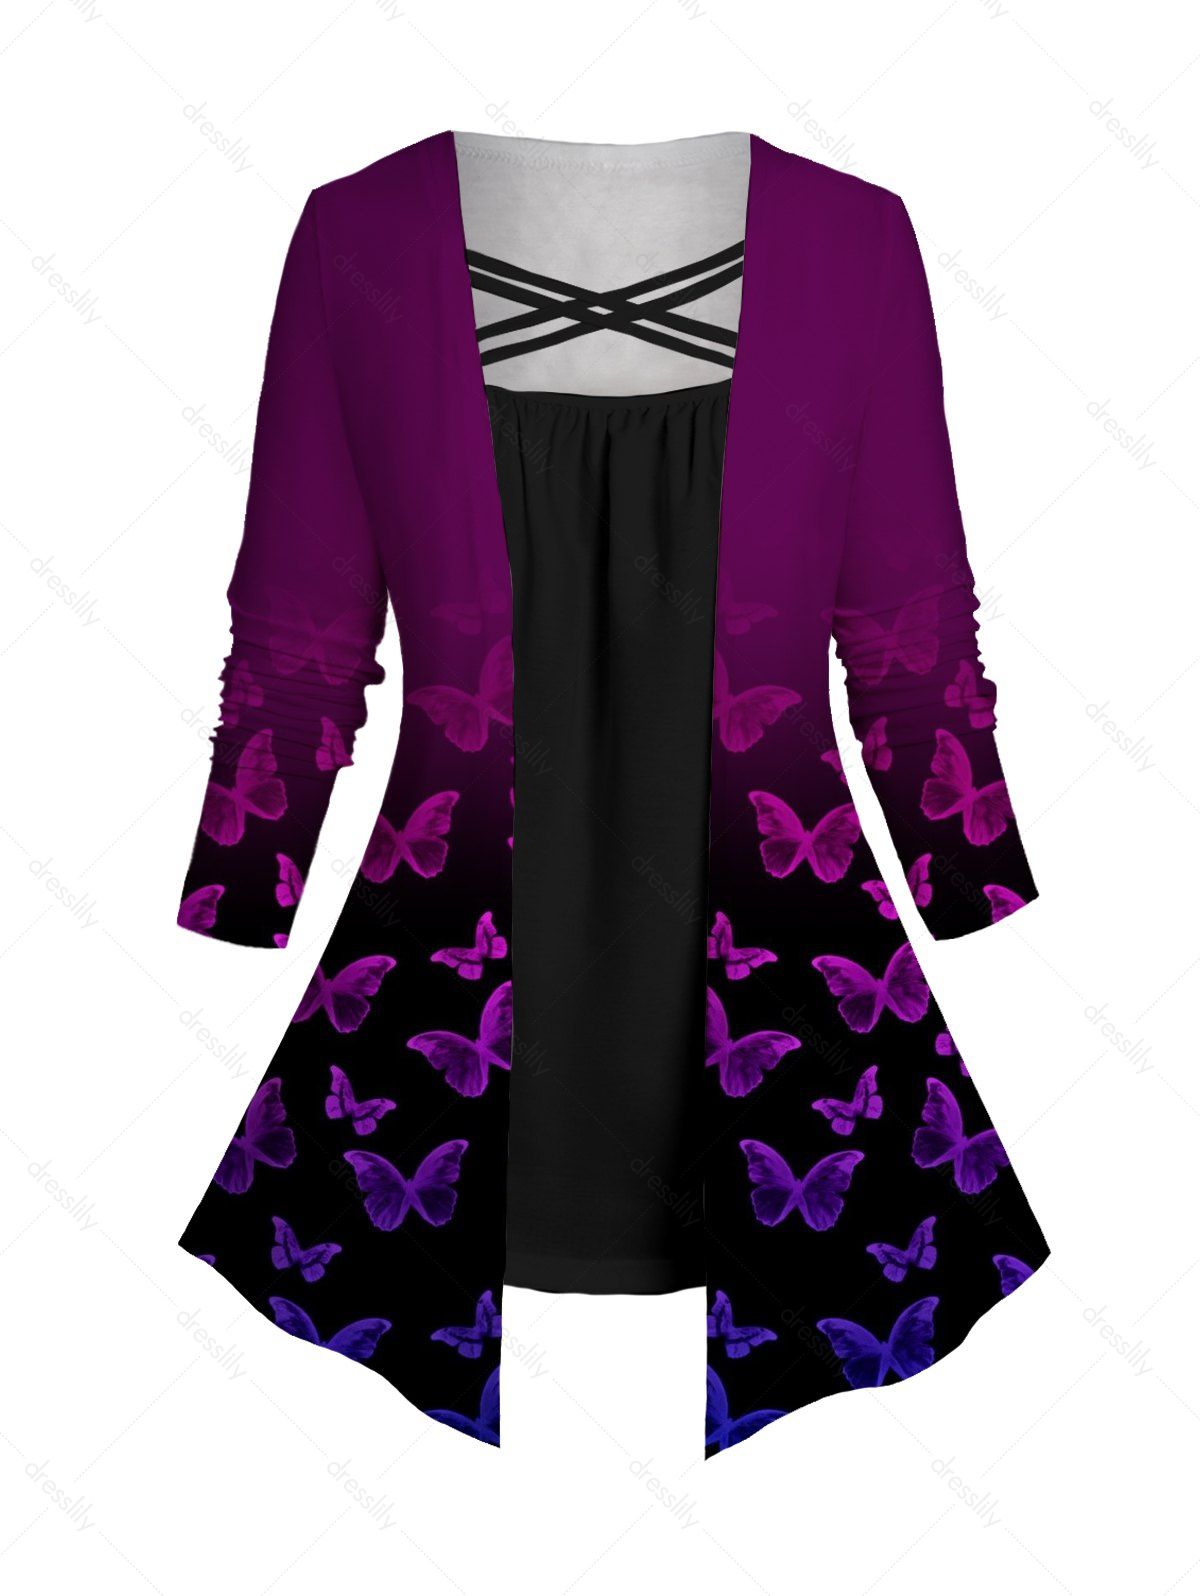 Dresslily Fashion Women Plus Size Butterfly Print Top Ombre Crisscross Faux Twinset Top Clothing L / us 12 Multicolor a